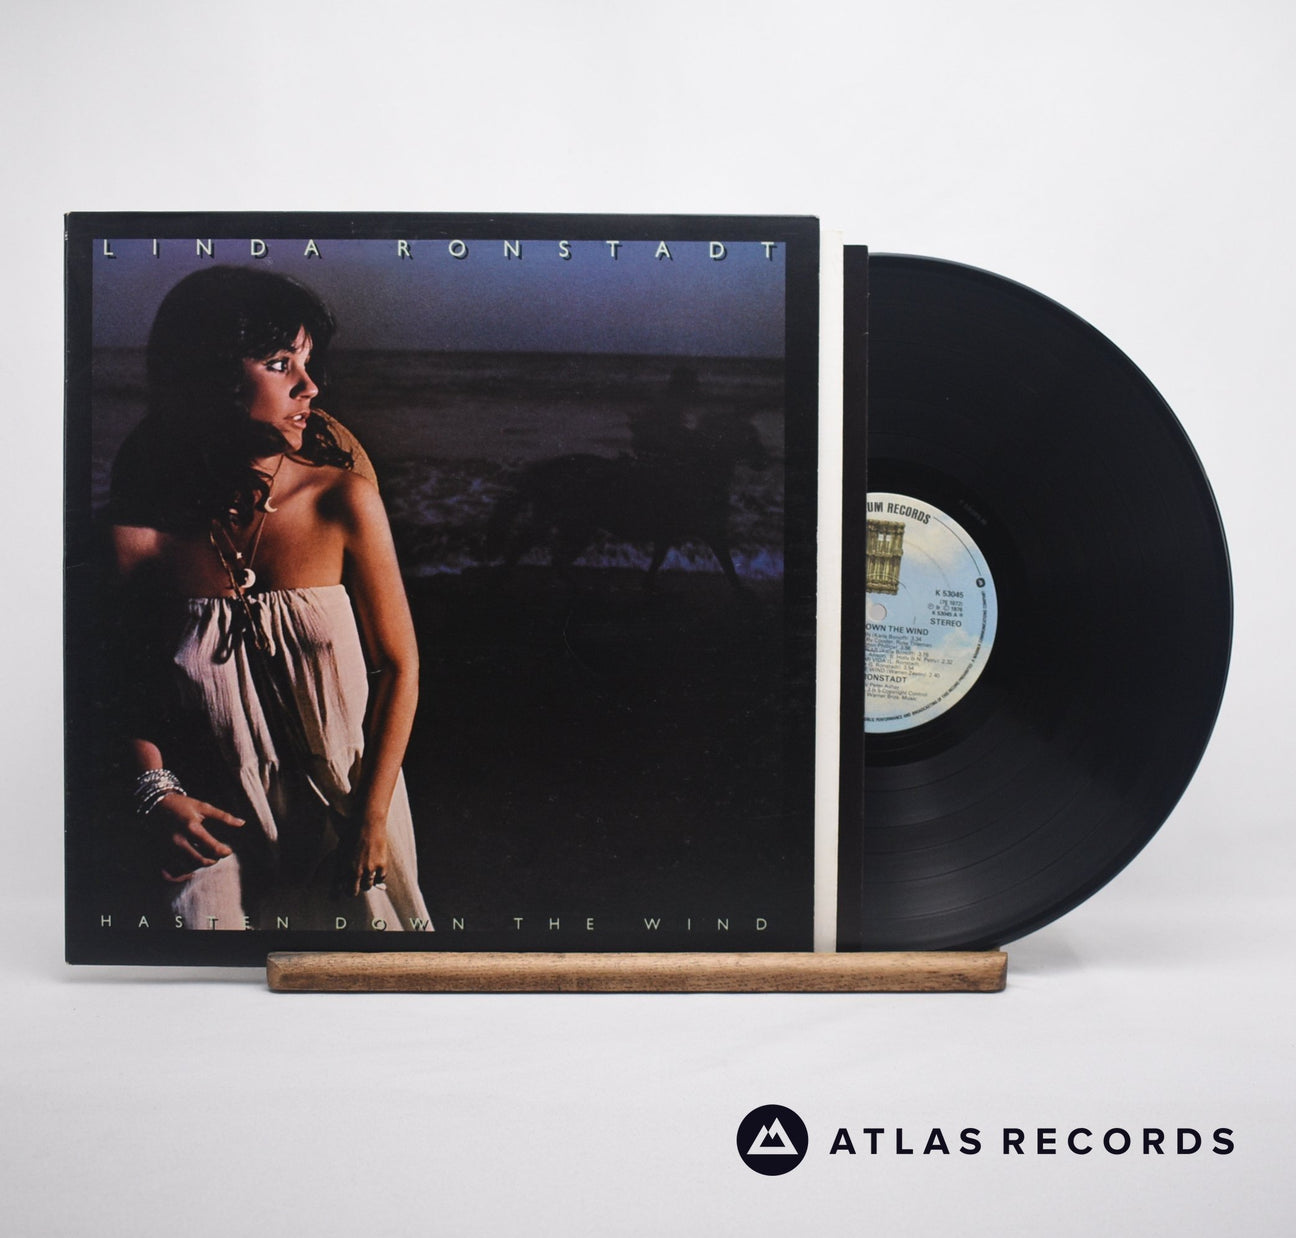 Linda Ronstadt Hasten Down The Wind LP Vinyl Record - Front Cover & Record